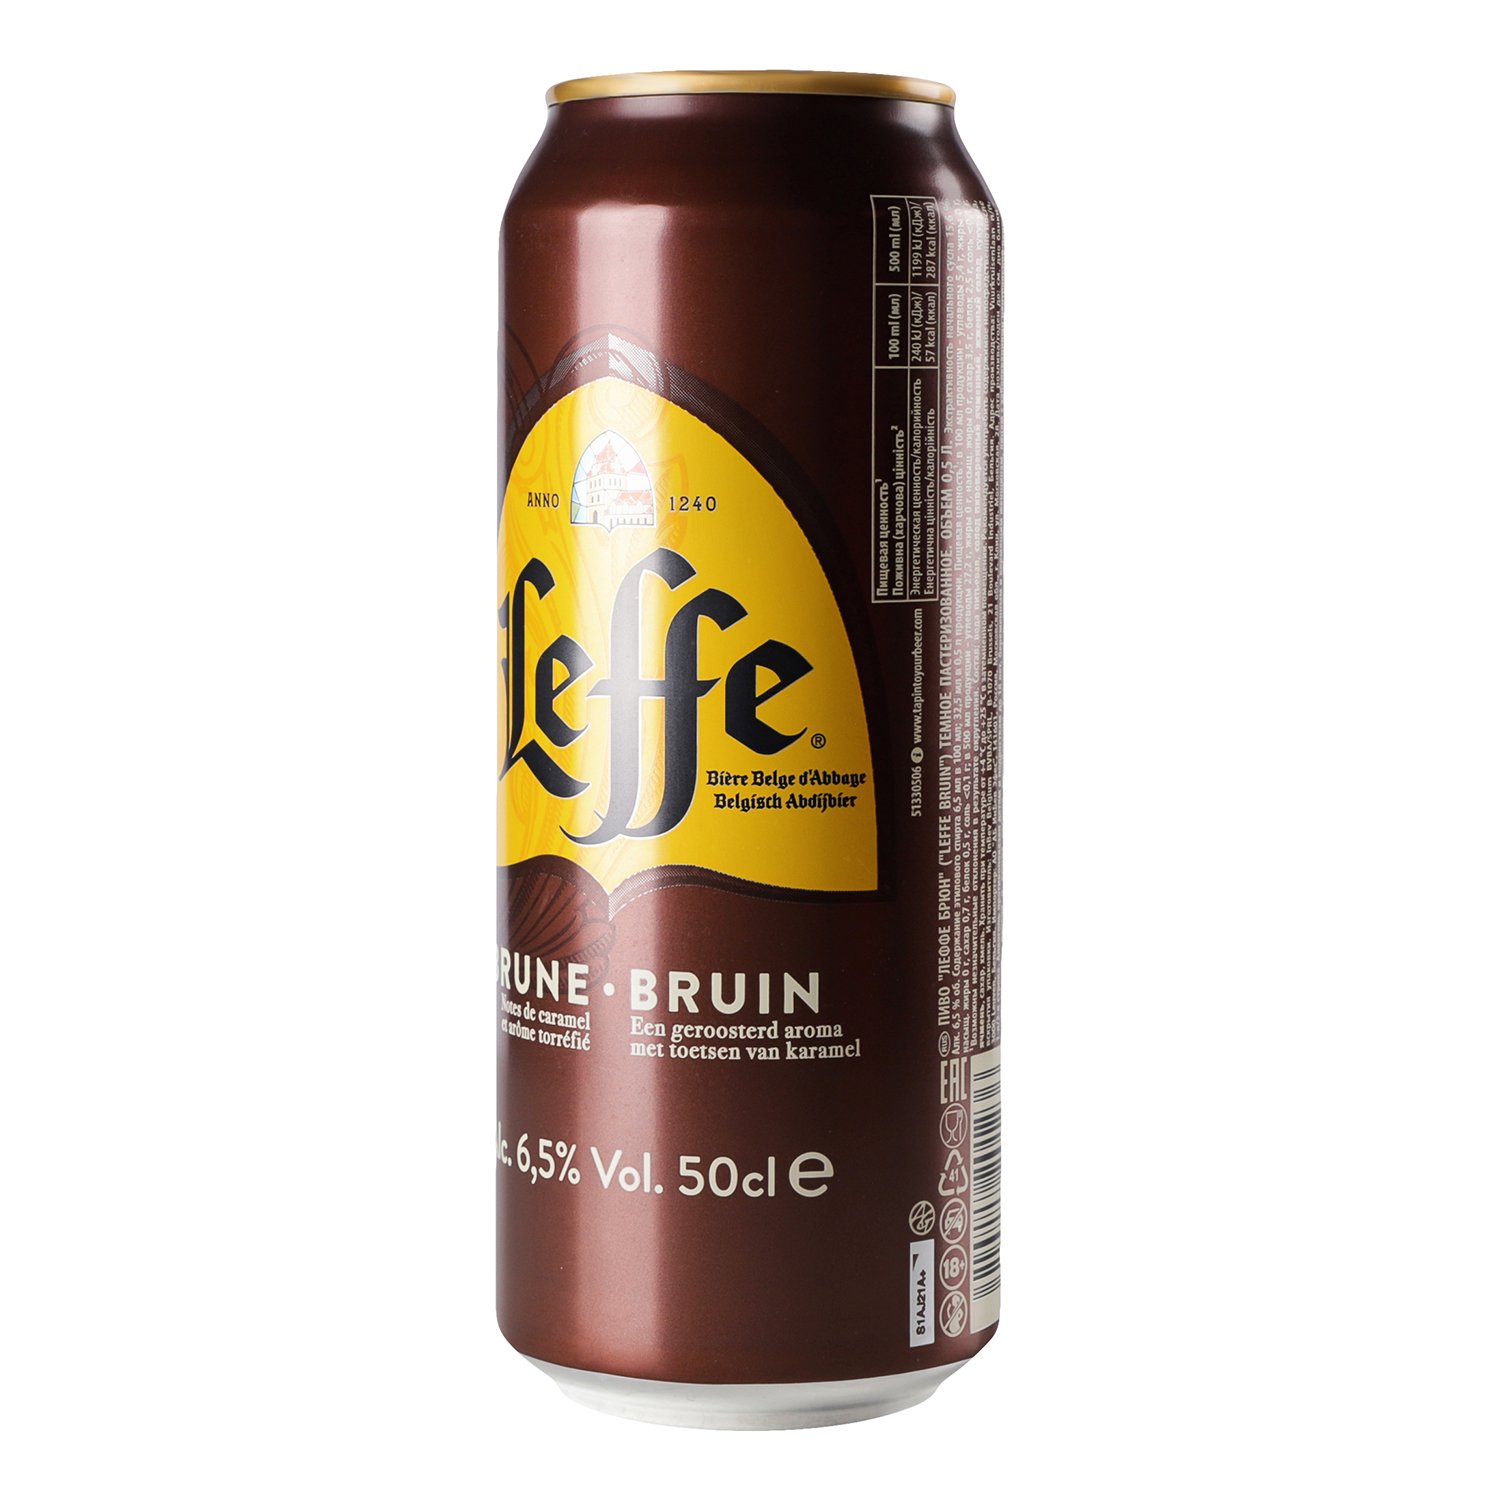 Пиво Leffe Brune, темное, 6,5%, ж/б, 0,5 л (478576) - фото 2